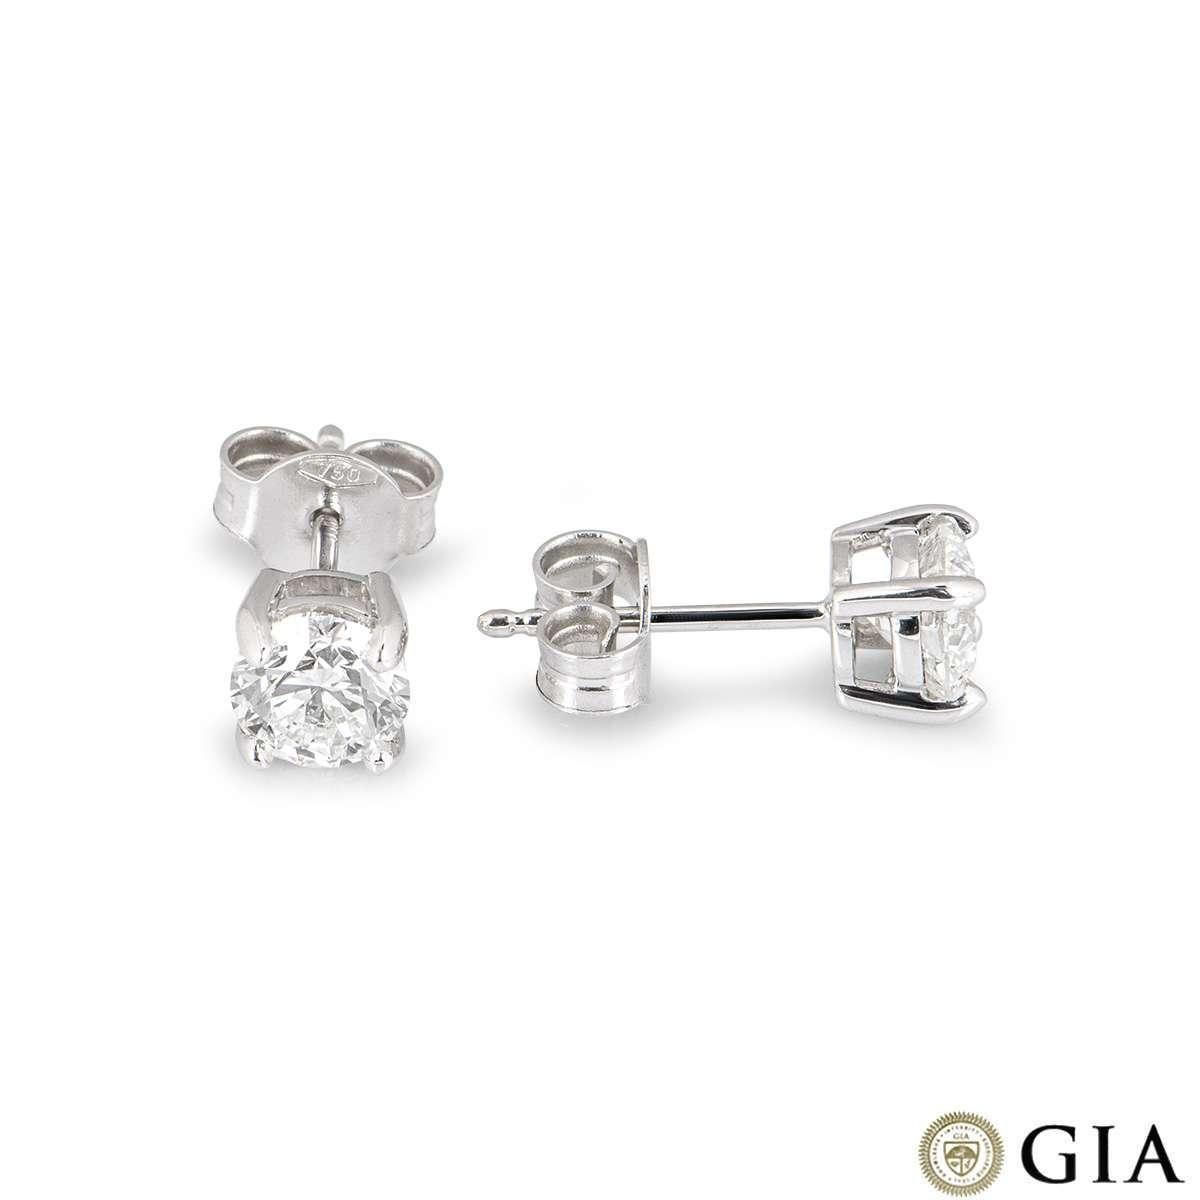 Round Cut GIA Certified Round Brilliant Cut Diamond Earrings 1.20 Carat